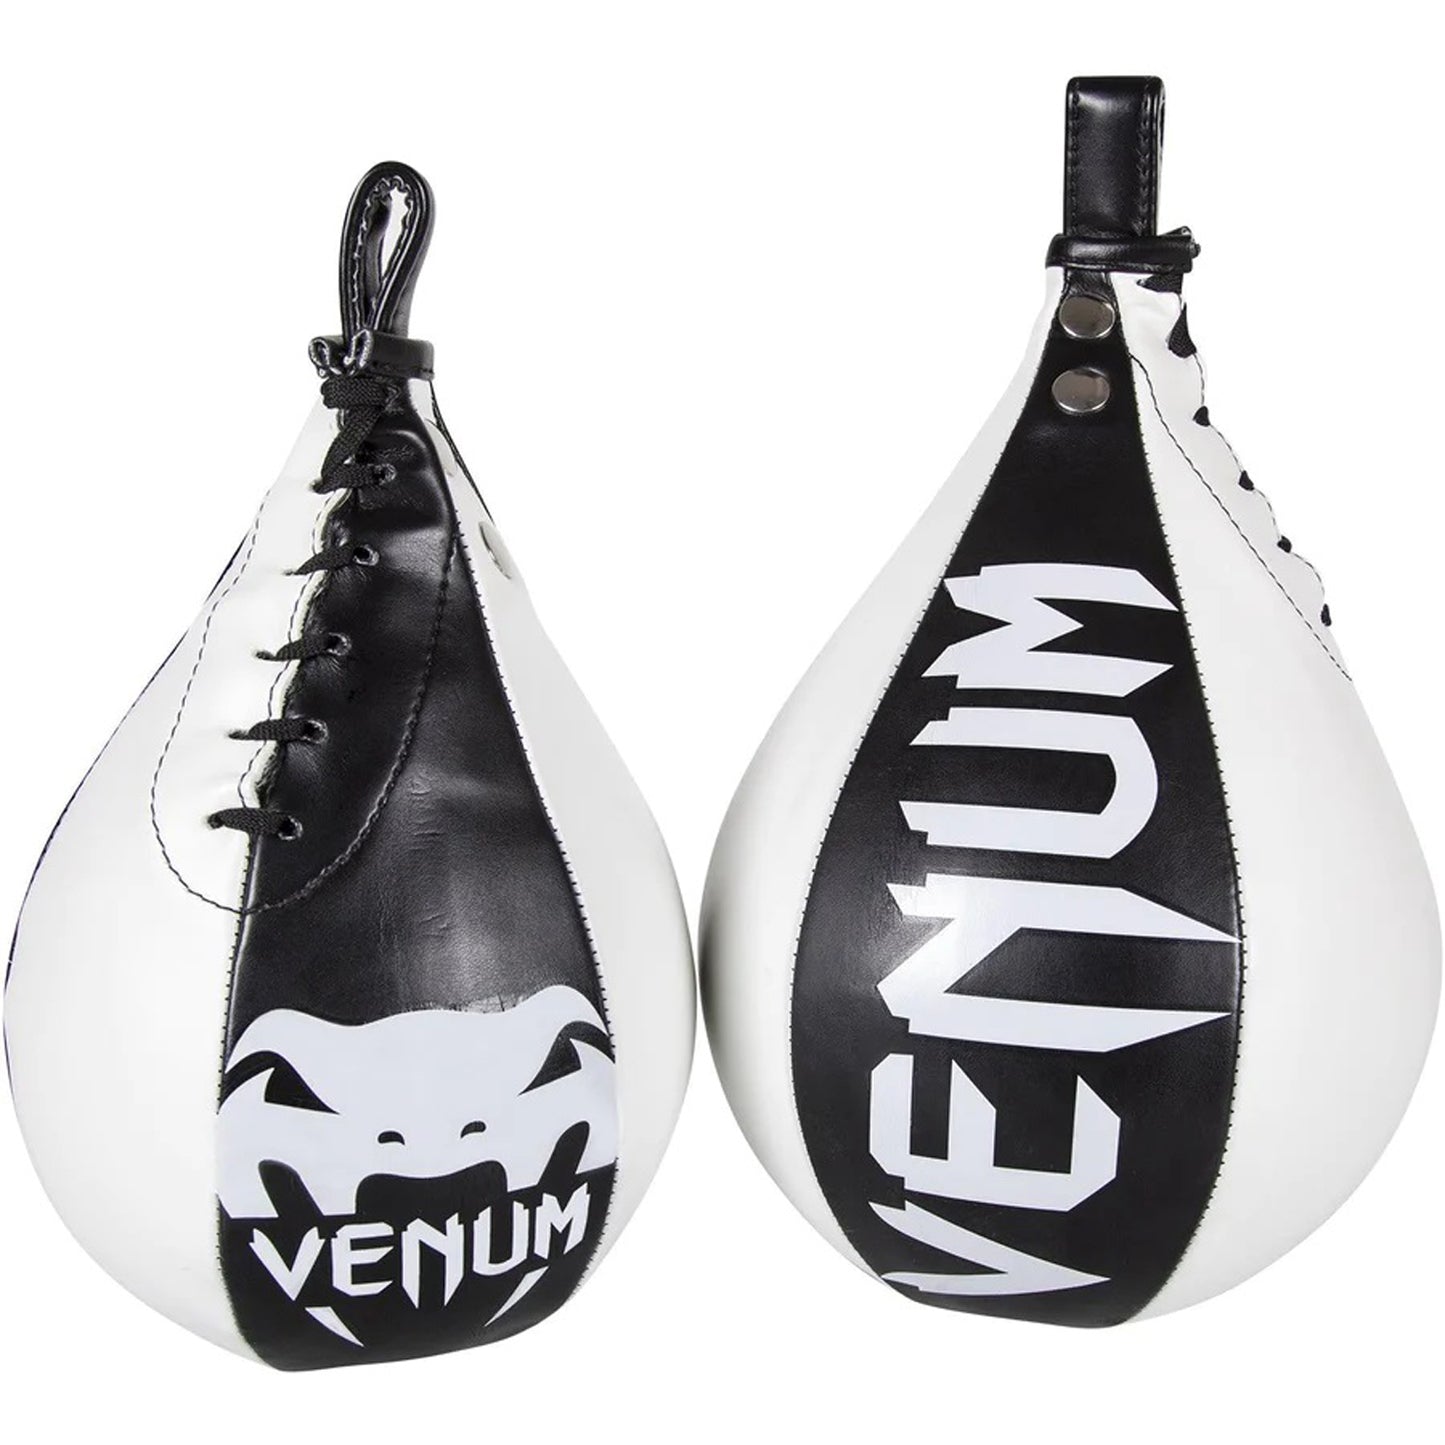 Venum Skintex Leather Speed Bag - Best Price online Prokicksports.com